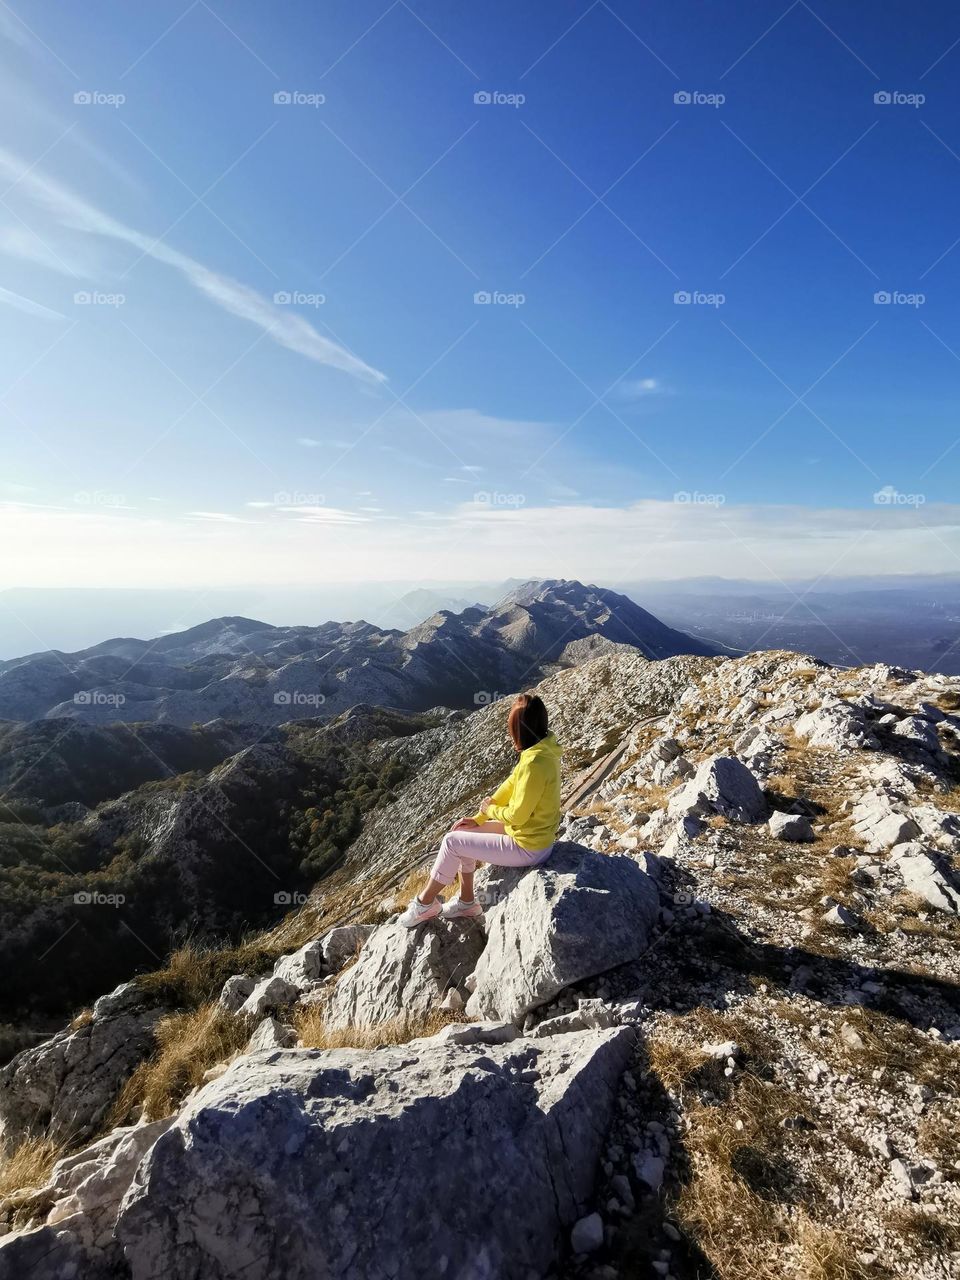 Croatia. Mountains, amazing scenery. Woman enjoy a beautiful view.